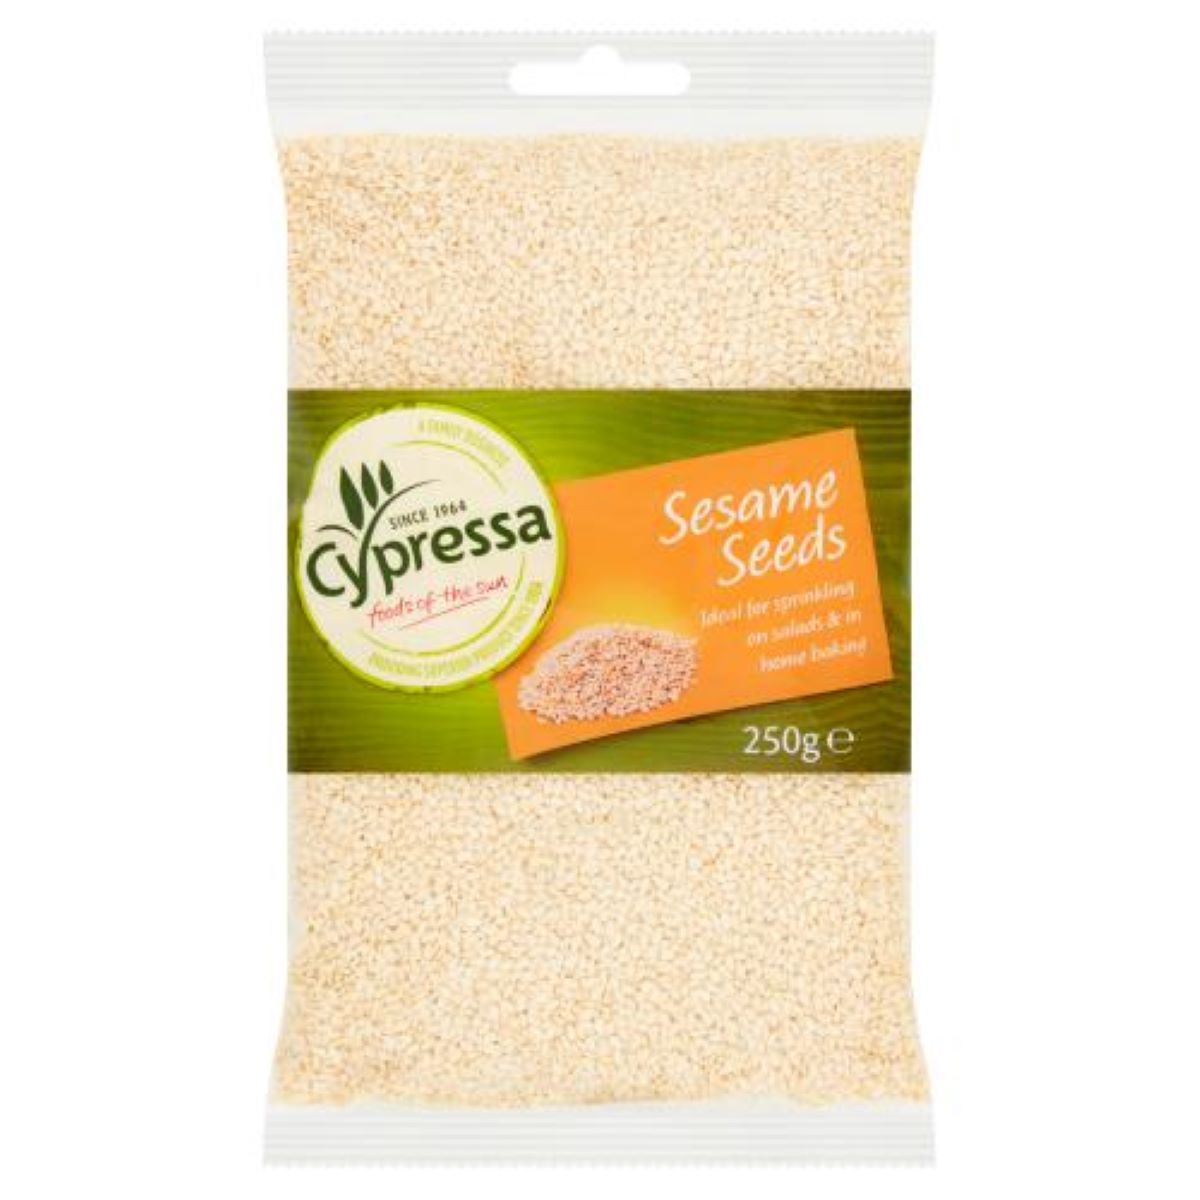 Cypressa Sesame Seeds 250g